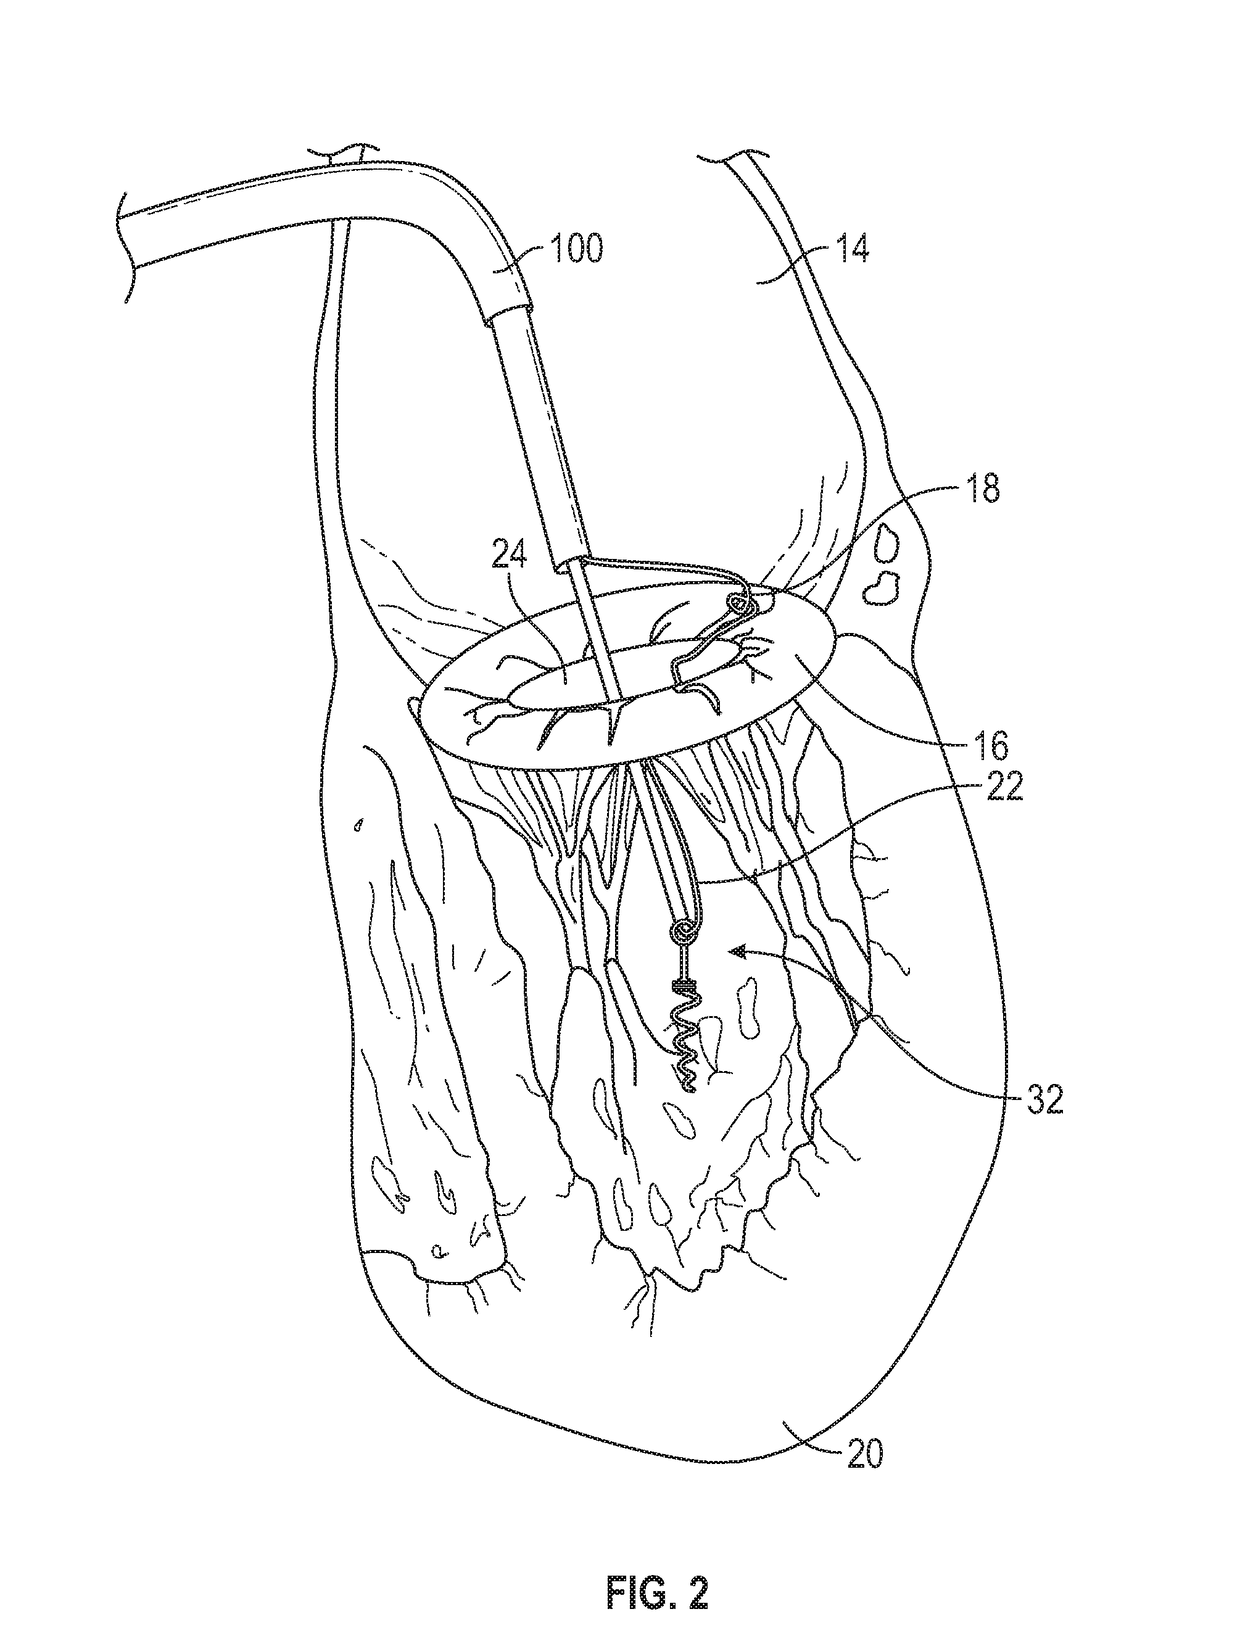 Apparatus for transvascular implantation of neo chordae tendinae